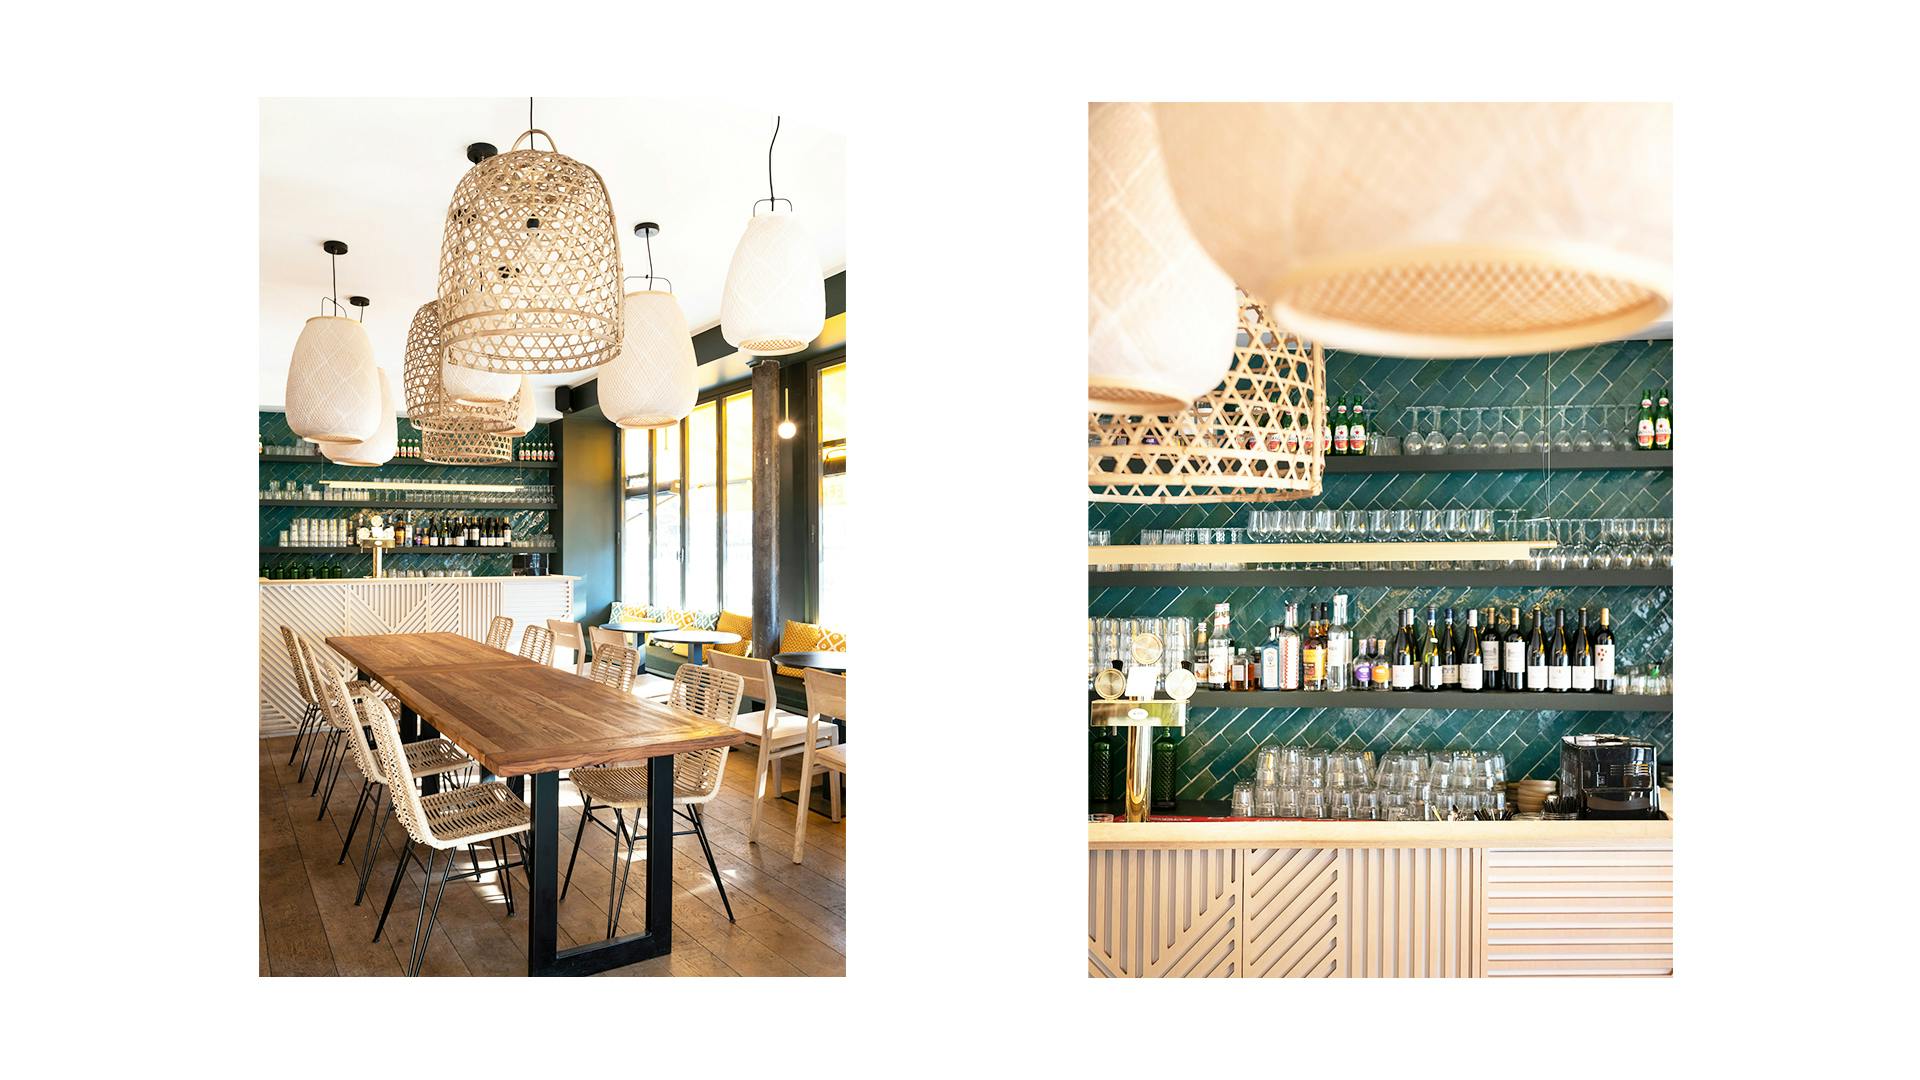 Djawa - restaurant - interior architecture - Paris - counter - bar - wood - faience